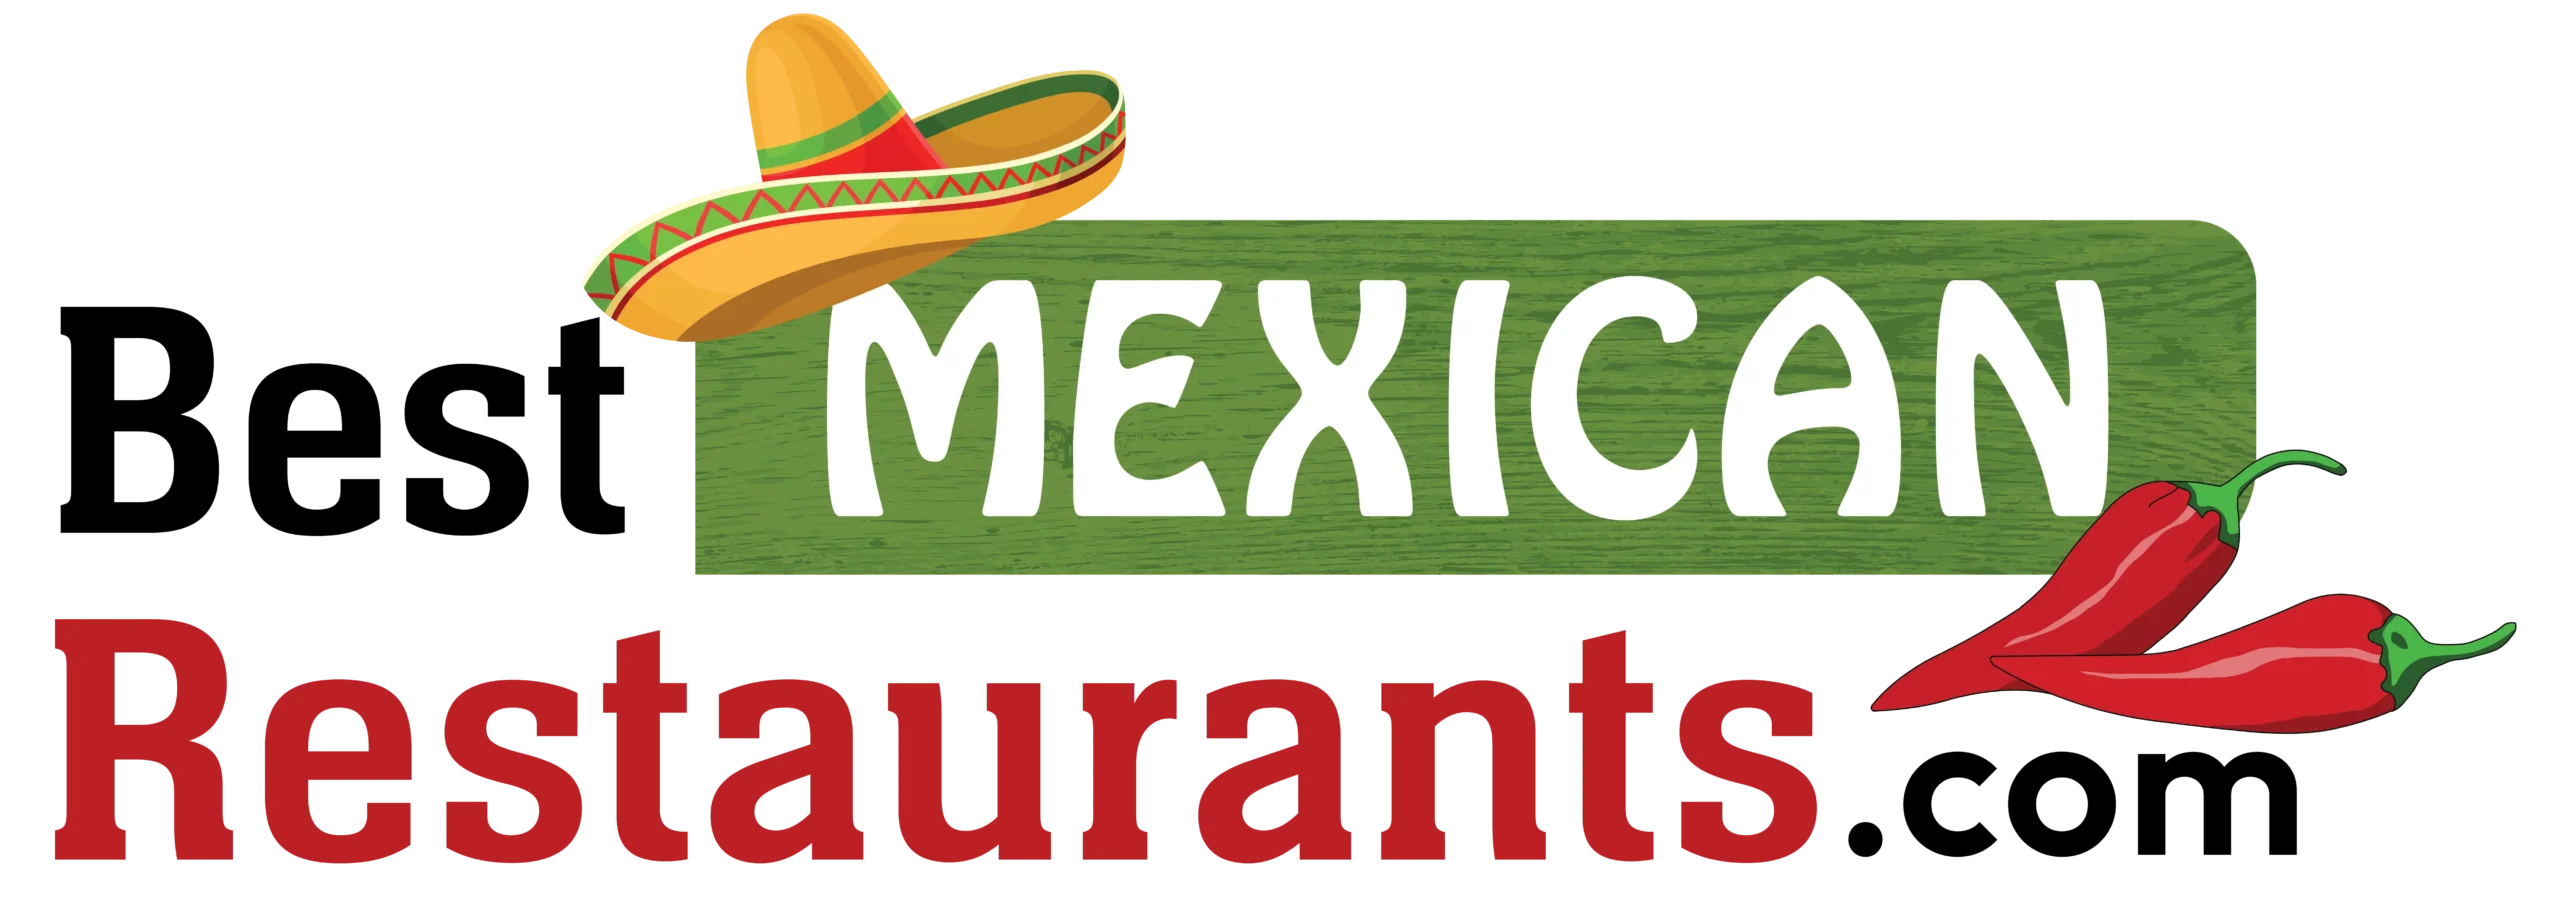 best mexican restaurants logo